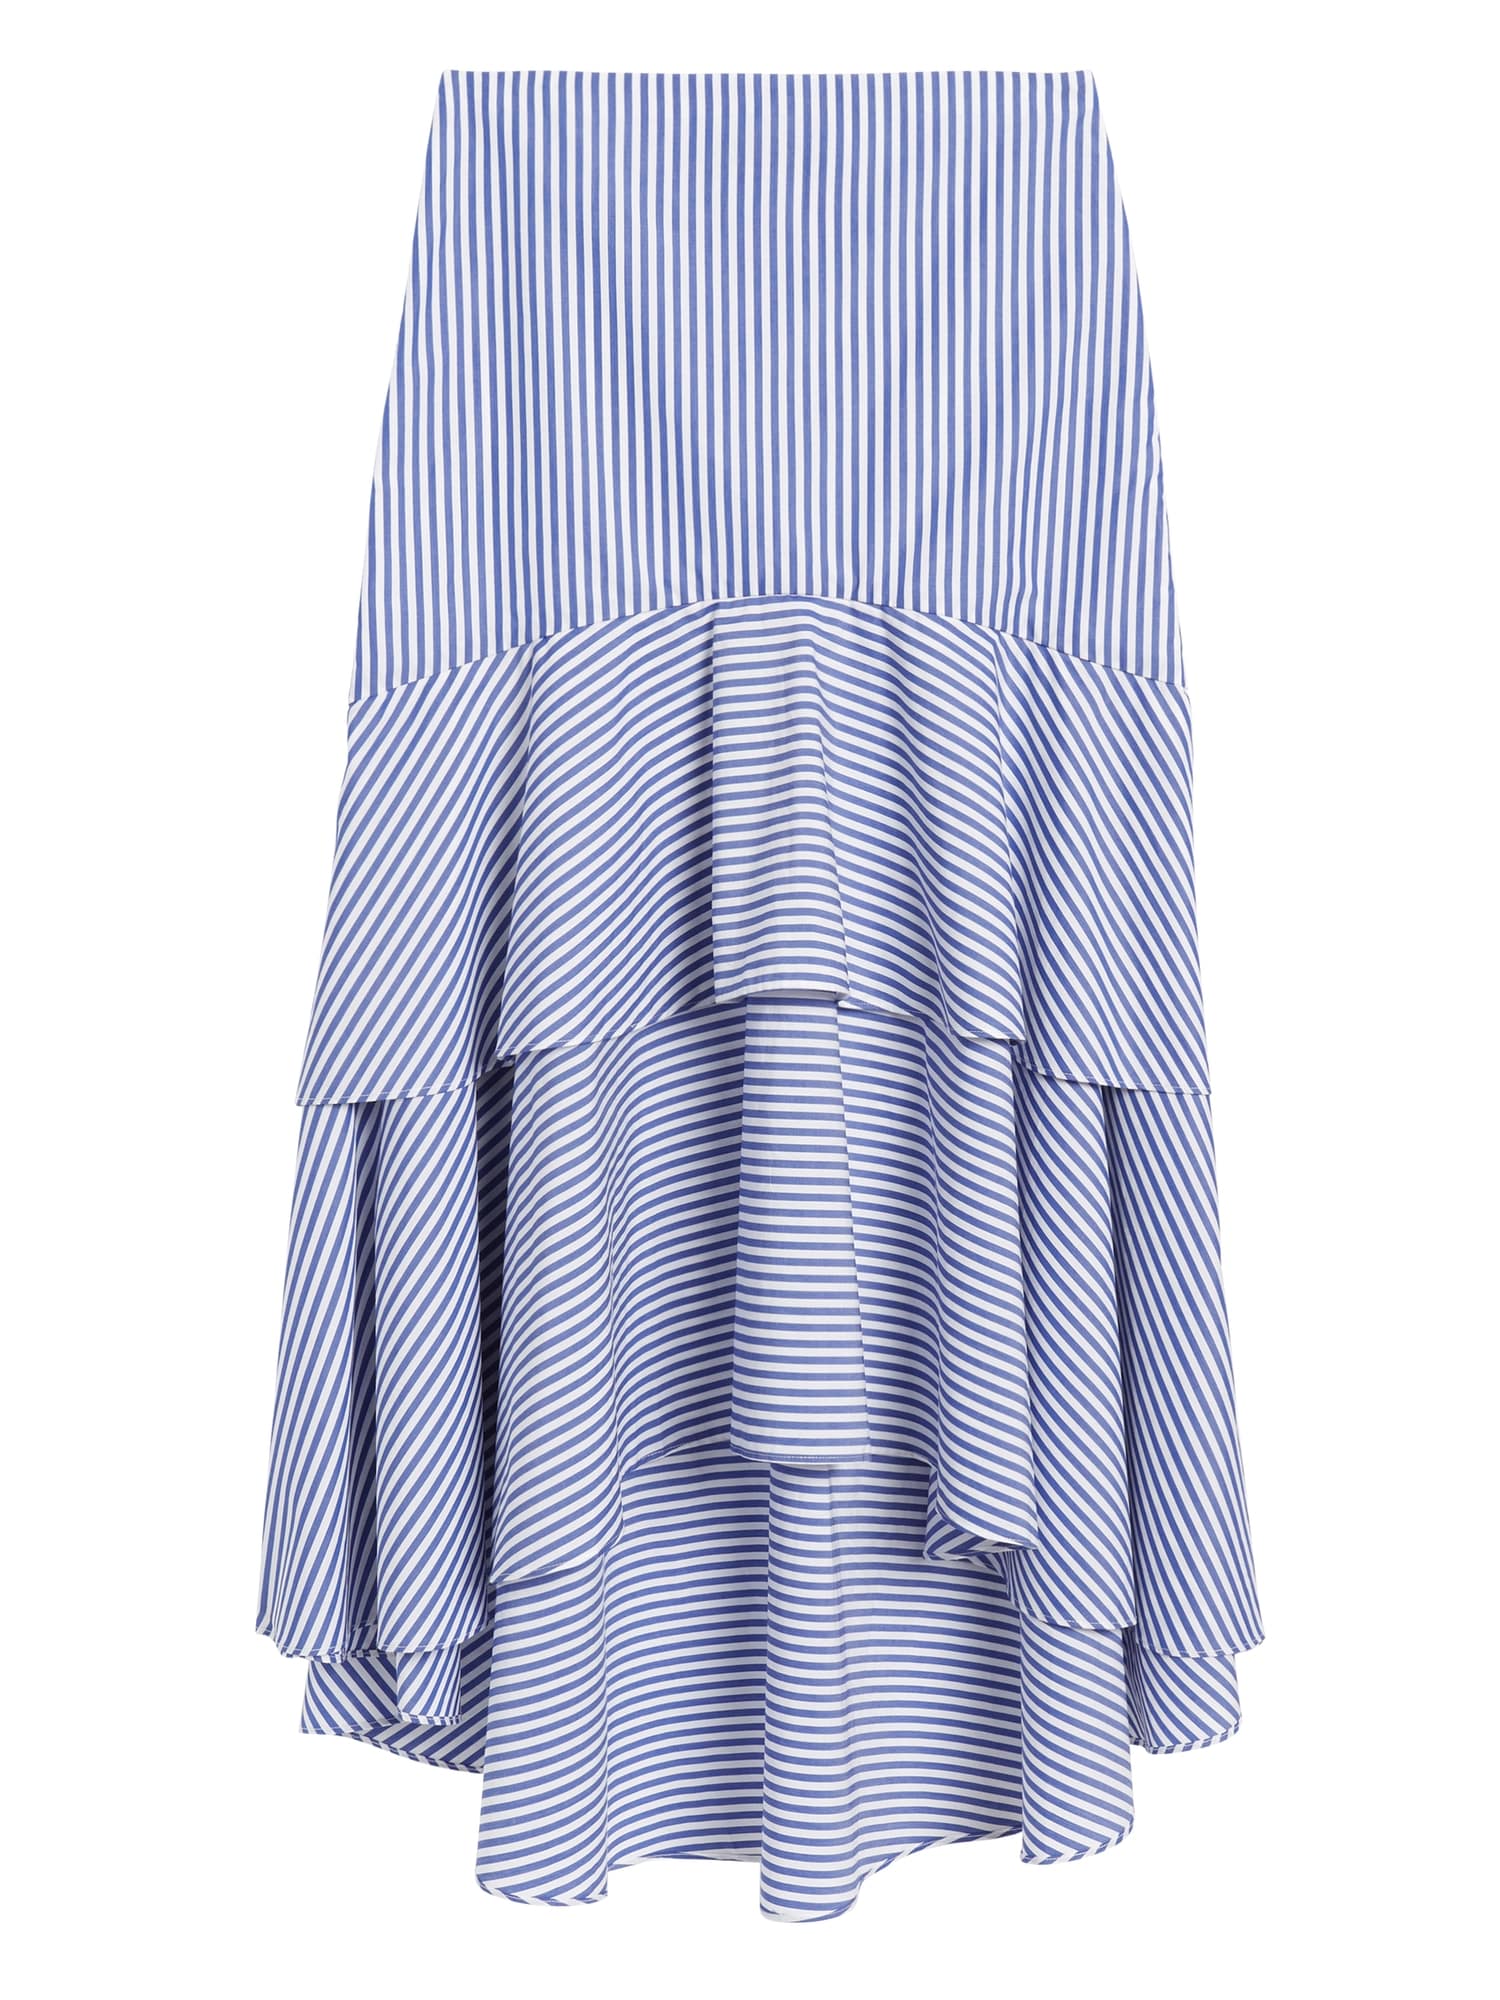 Stripe Poplin High-Low Skirt